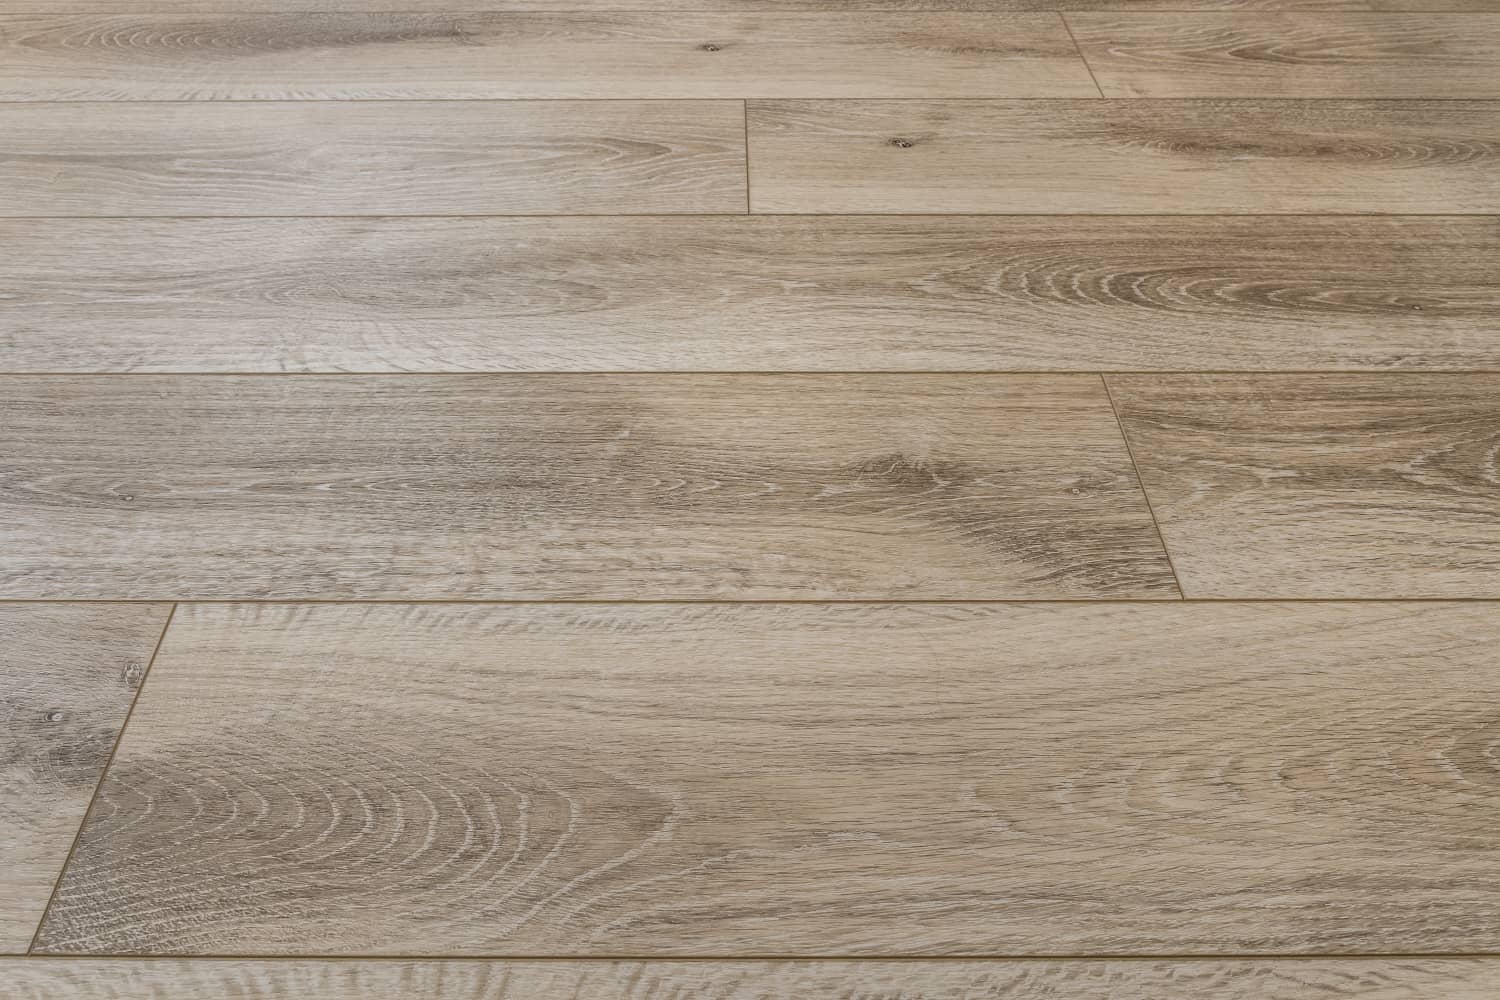 Nicholas Design Build | A close up view of a modern wooden floor.